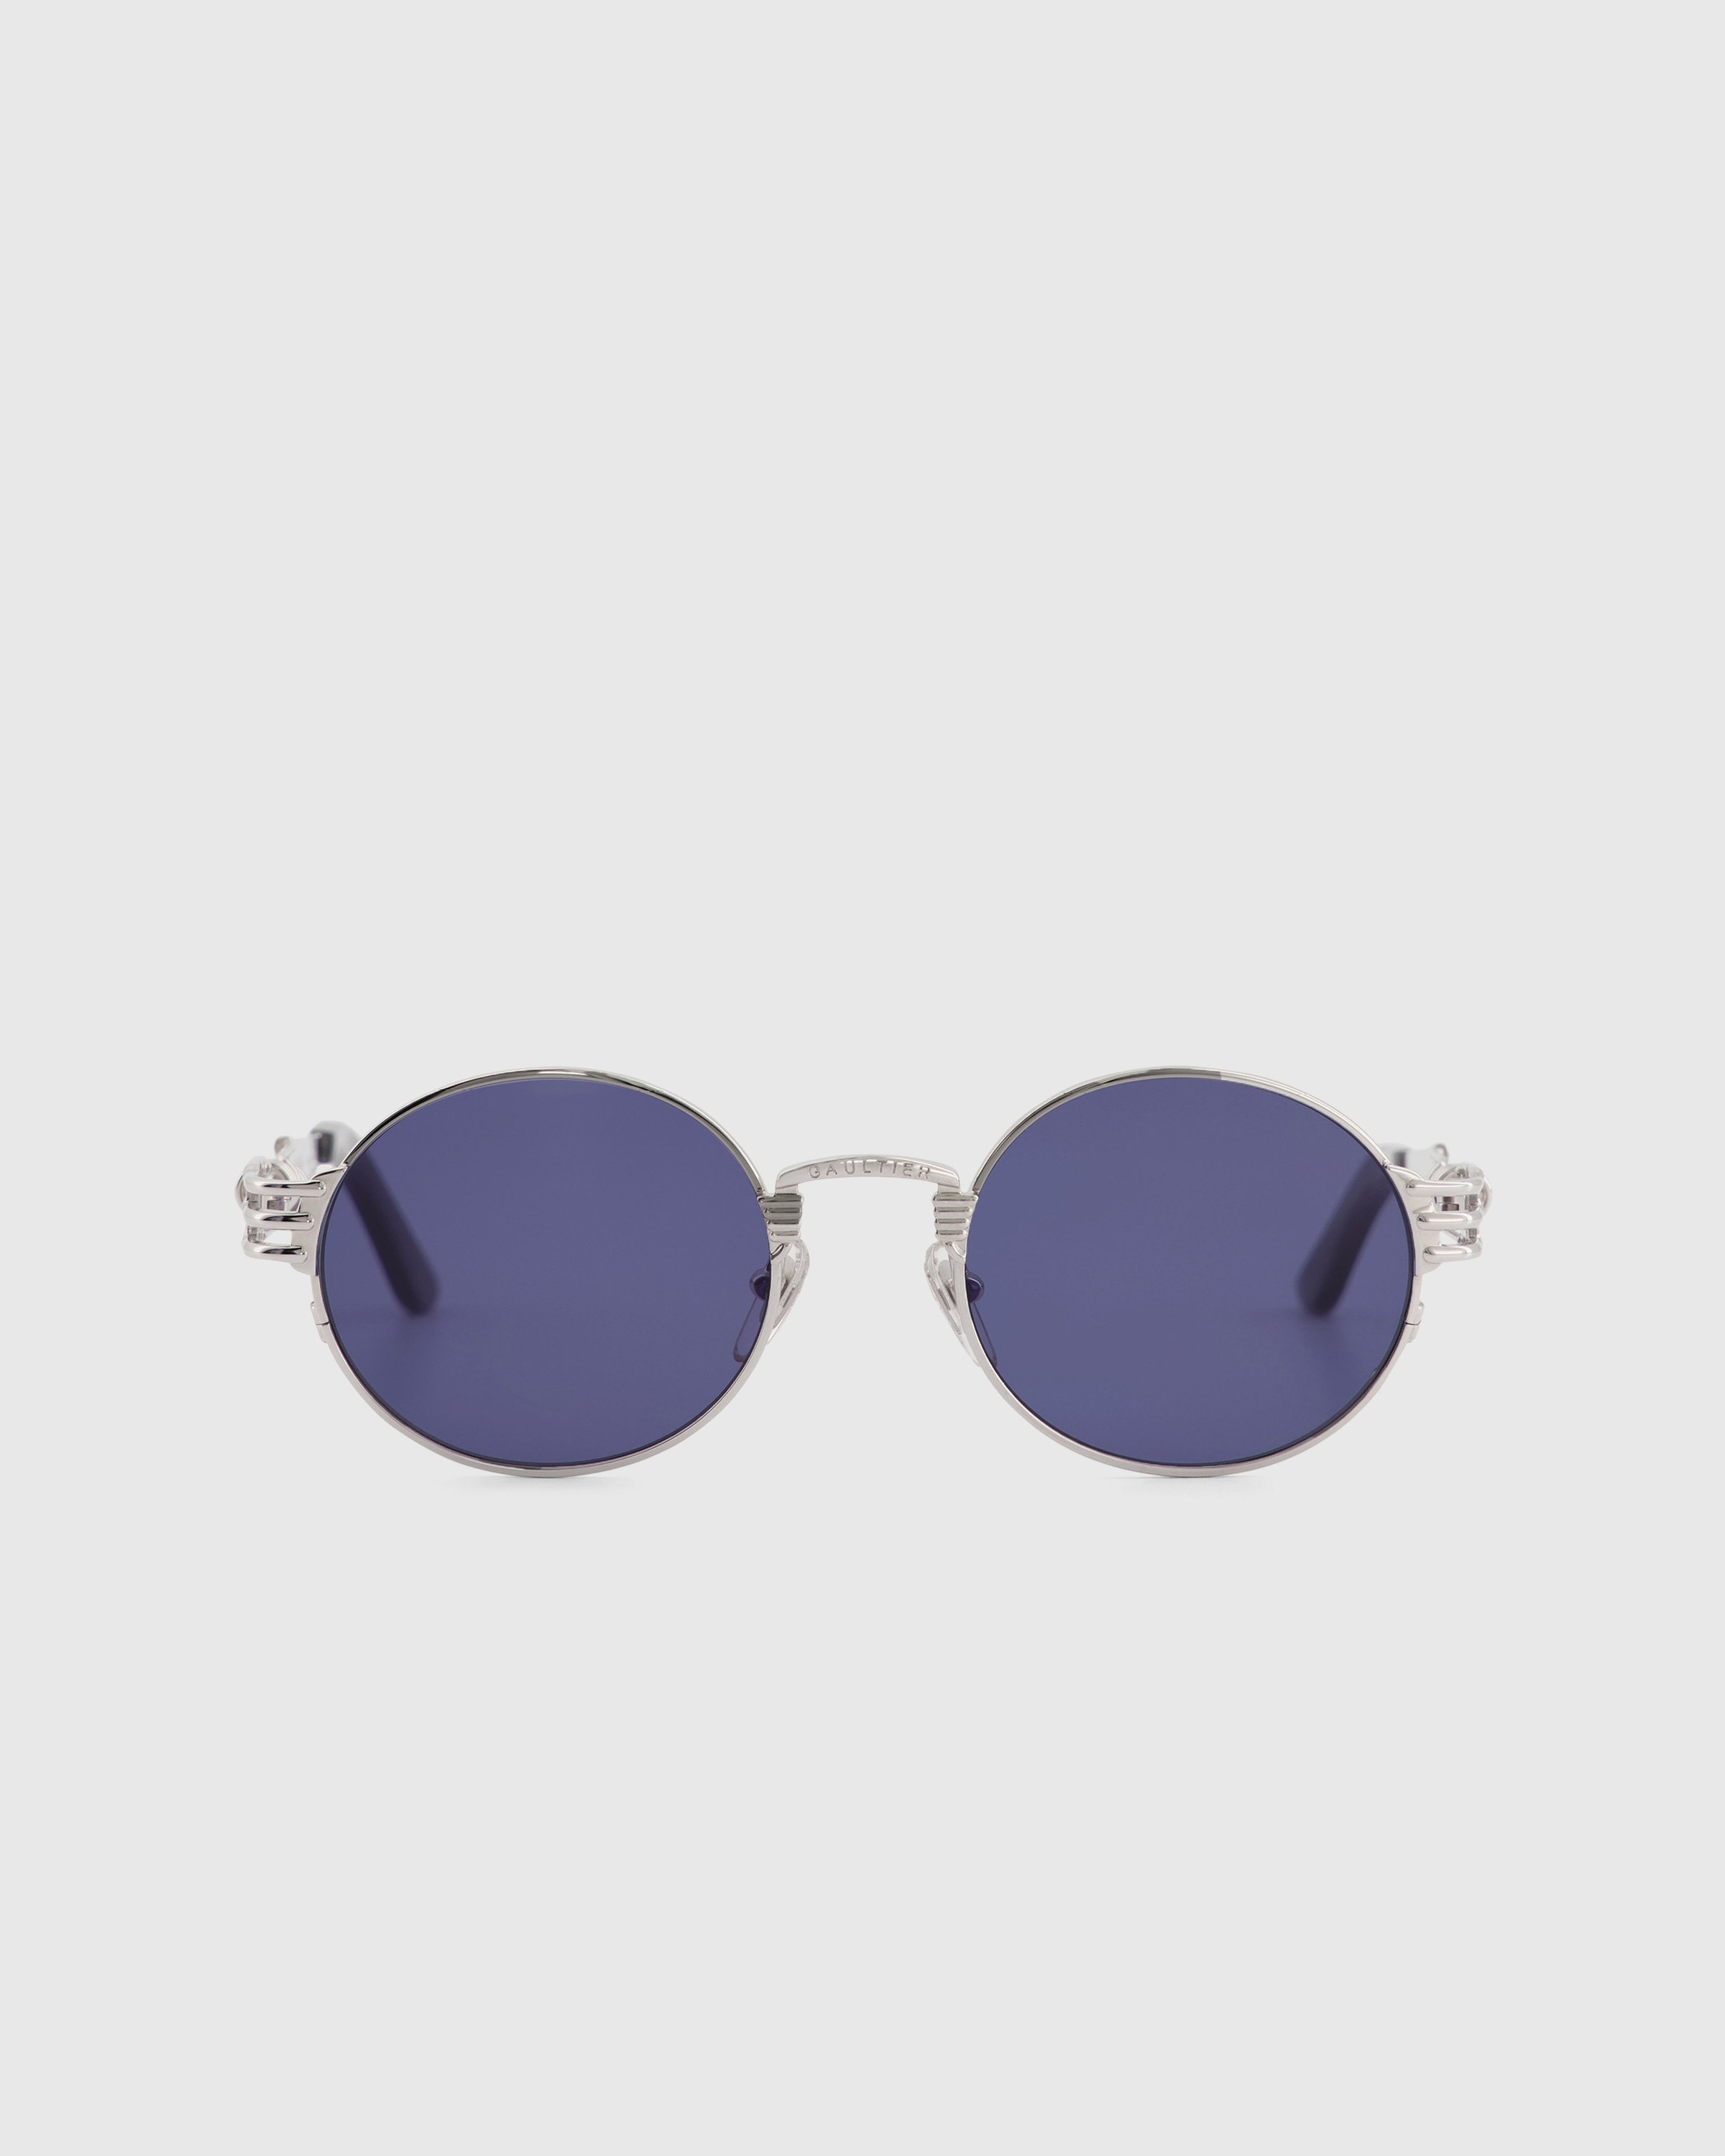 Jean Paul Gaultier x Burna Boy - 56-6106 Double Resort Sunglasses Silver - Accessories - Silver - Image 1